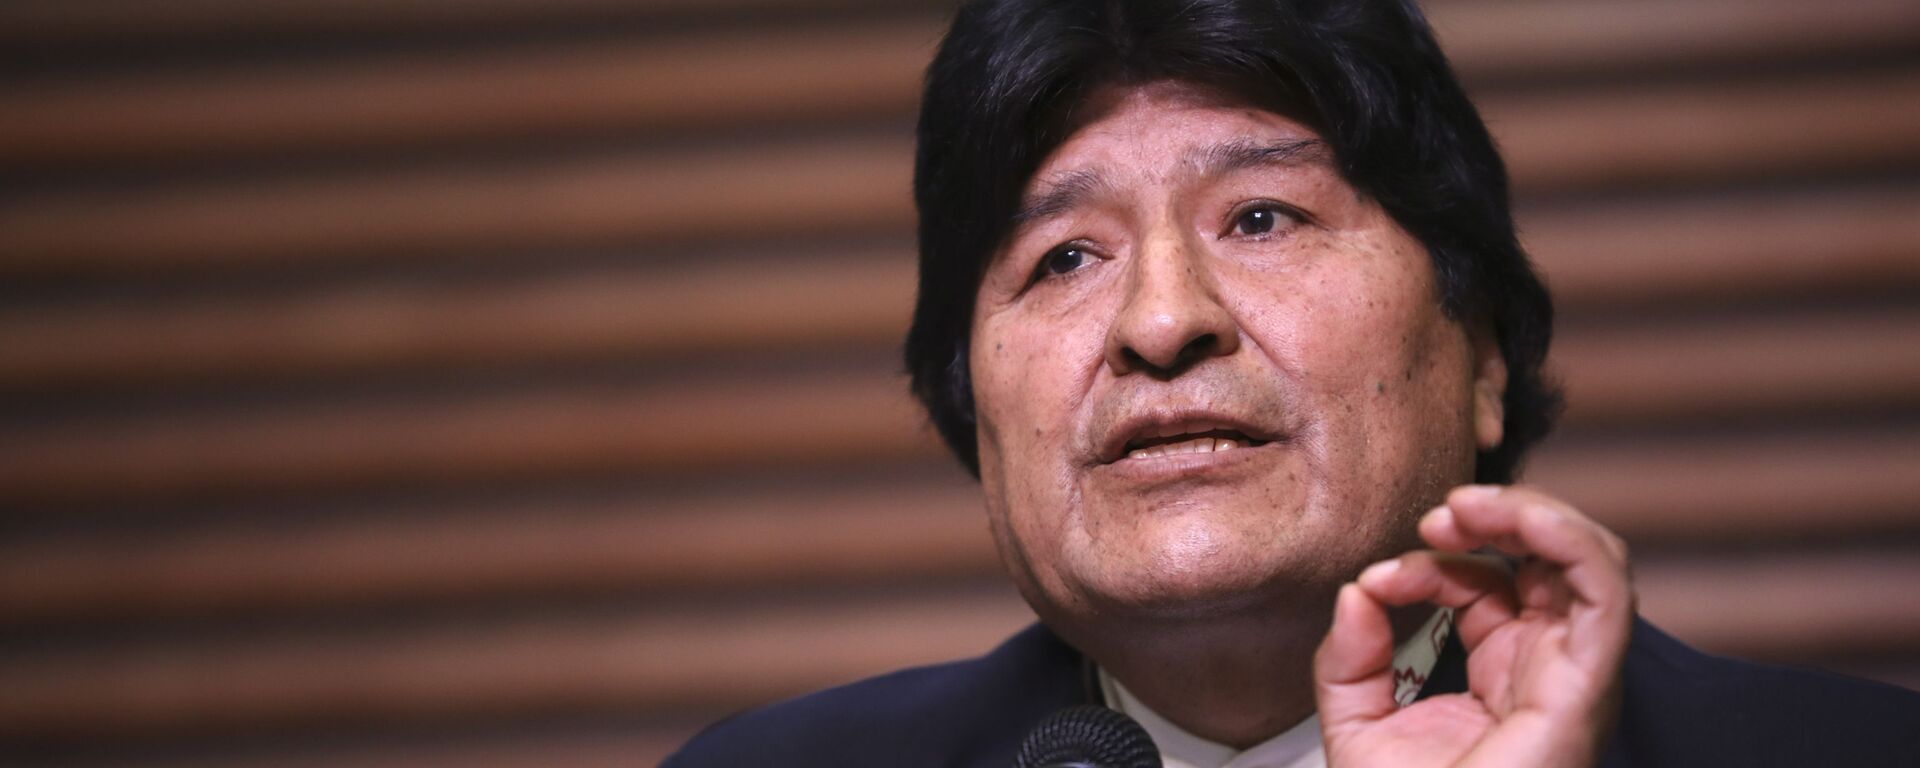 Evo Morales, expresidente boliviano - Sputnik Mundo, 1920, 21.04.2021